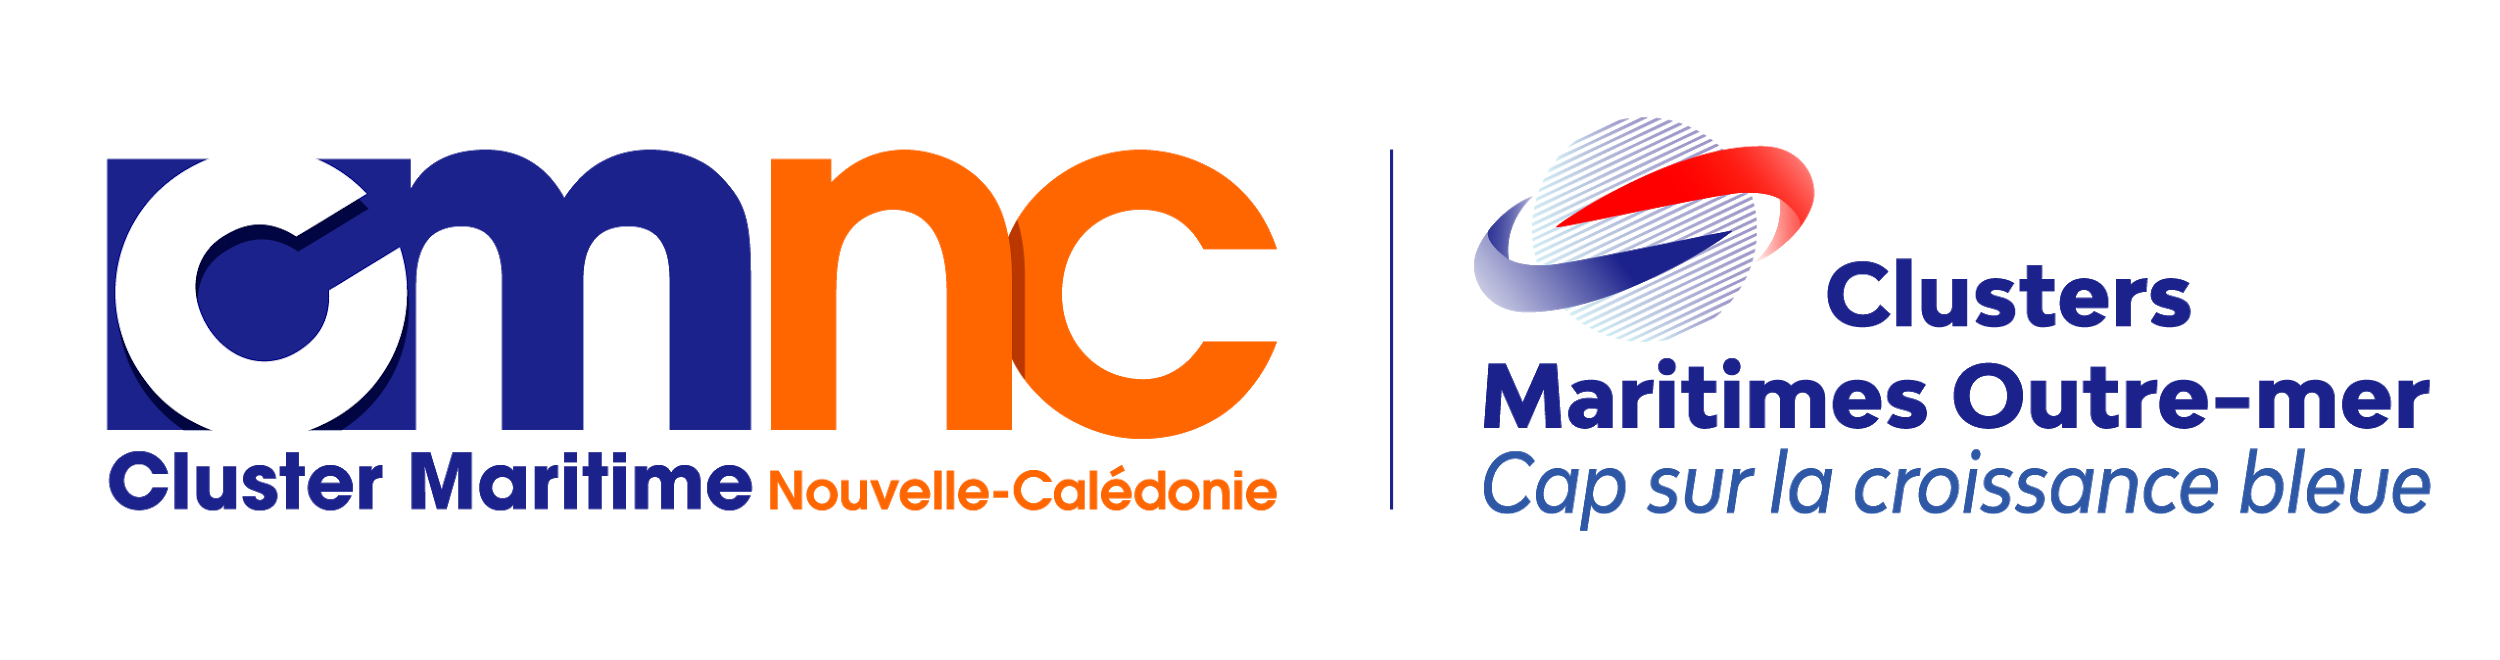 partners_logo_cmnc